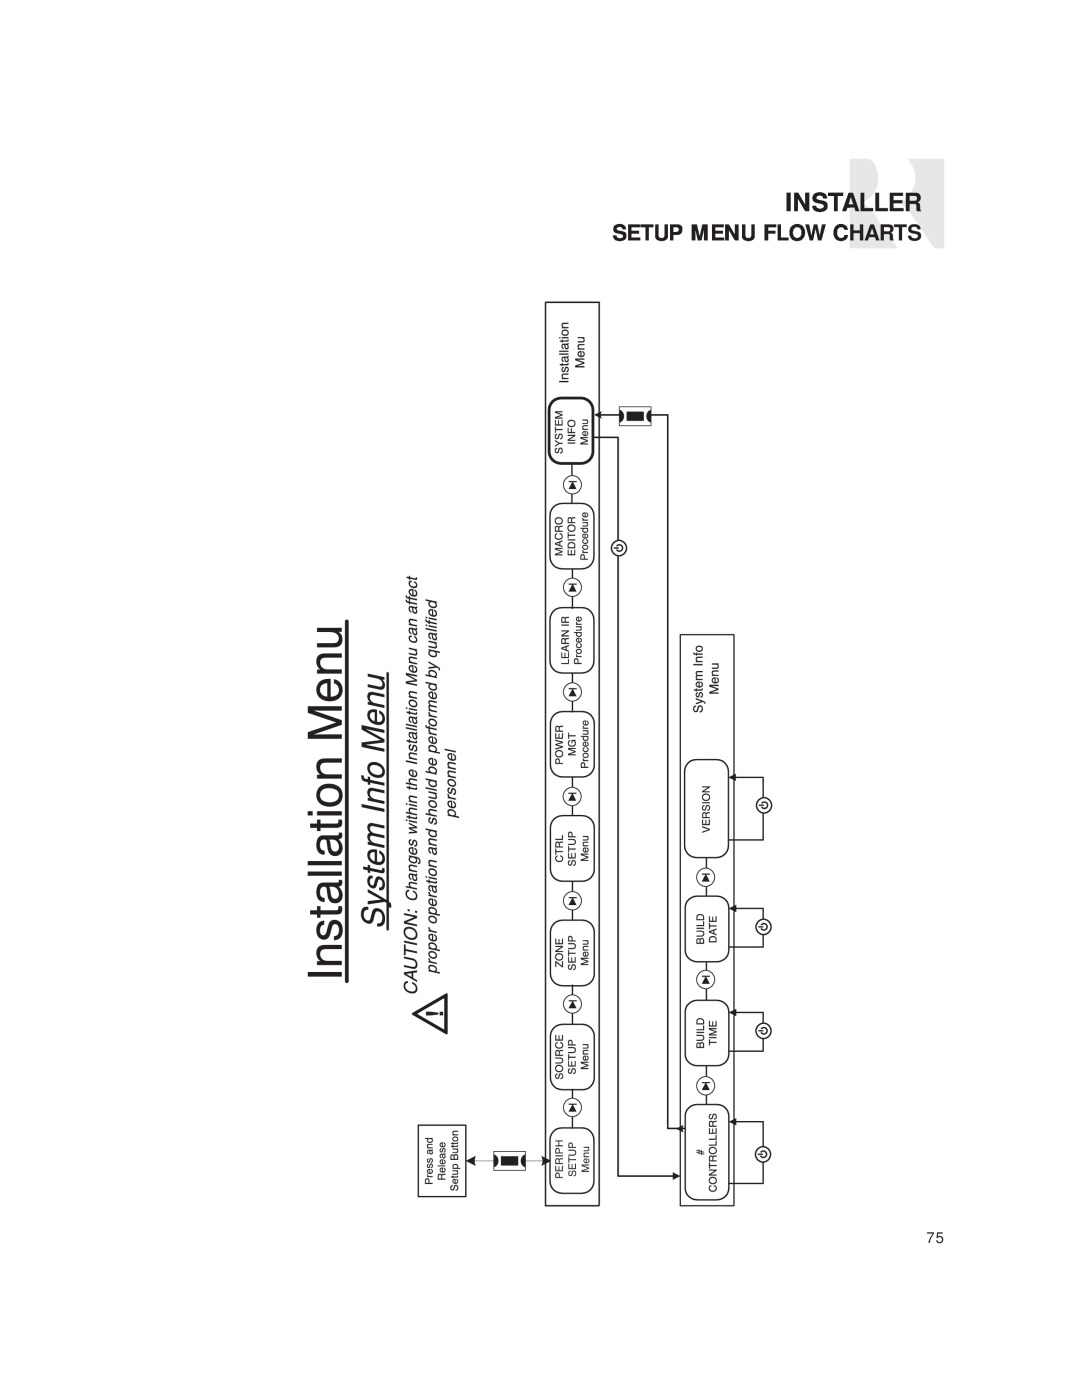 Russound CAM6.6T-S1 instruction manual Installer, Setup Menu Flow Charts 